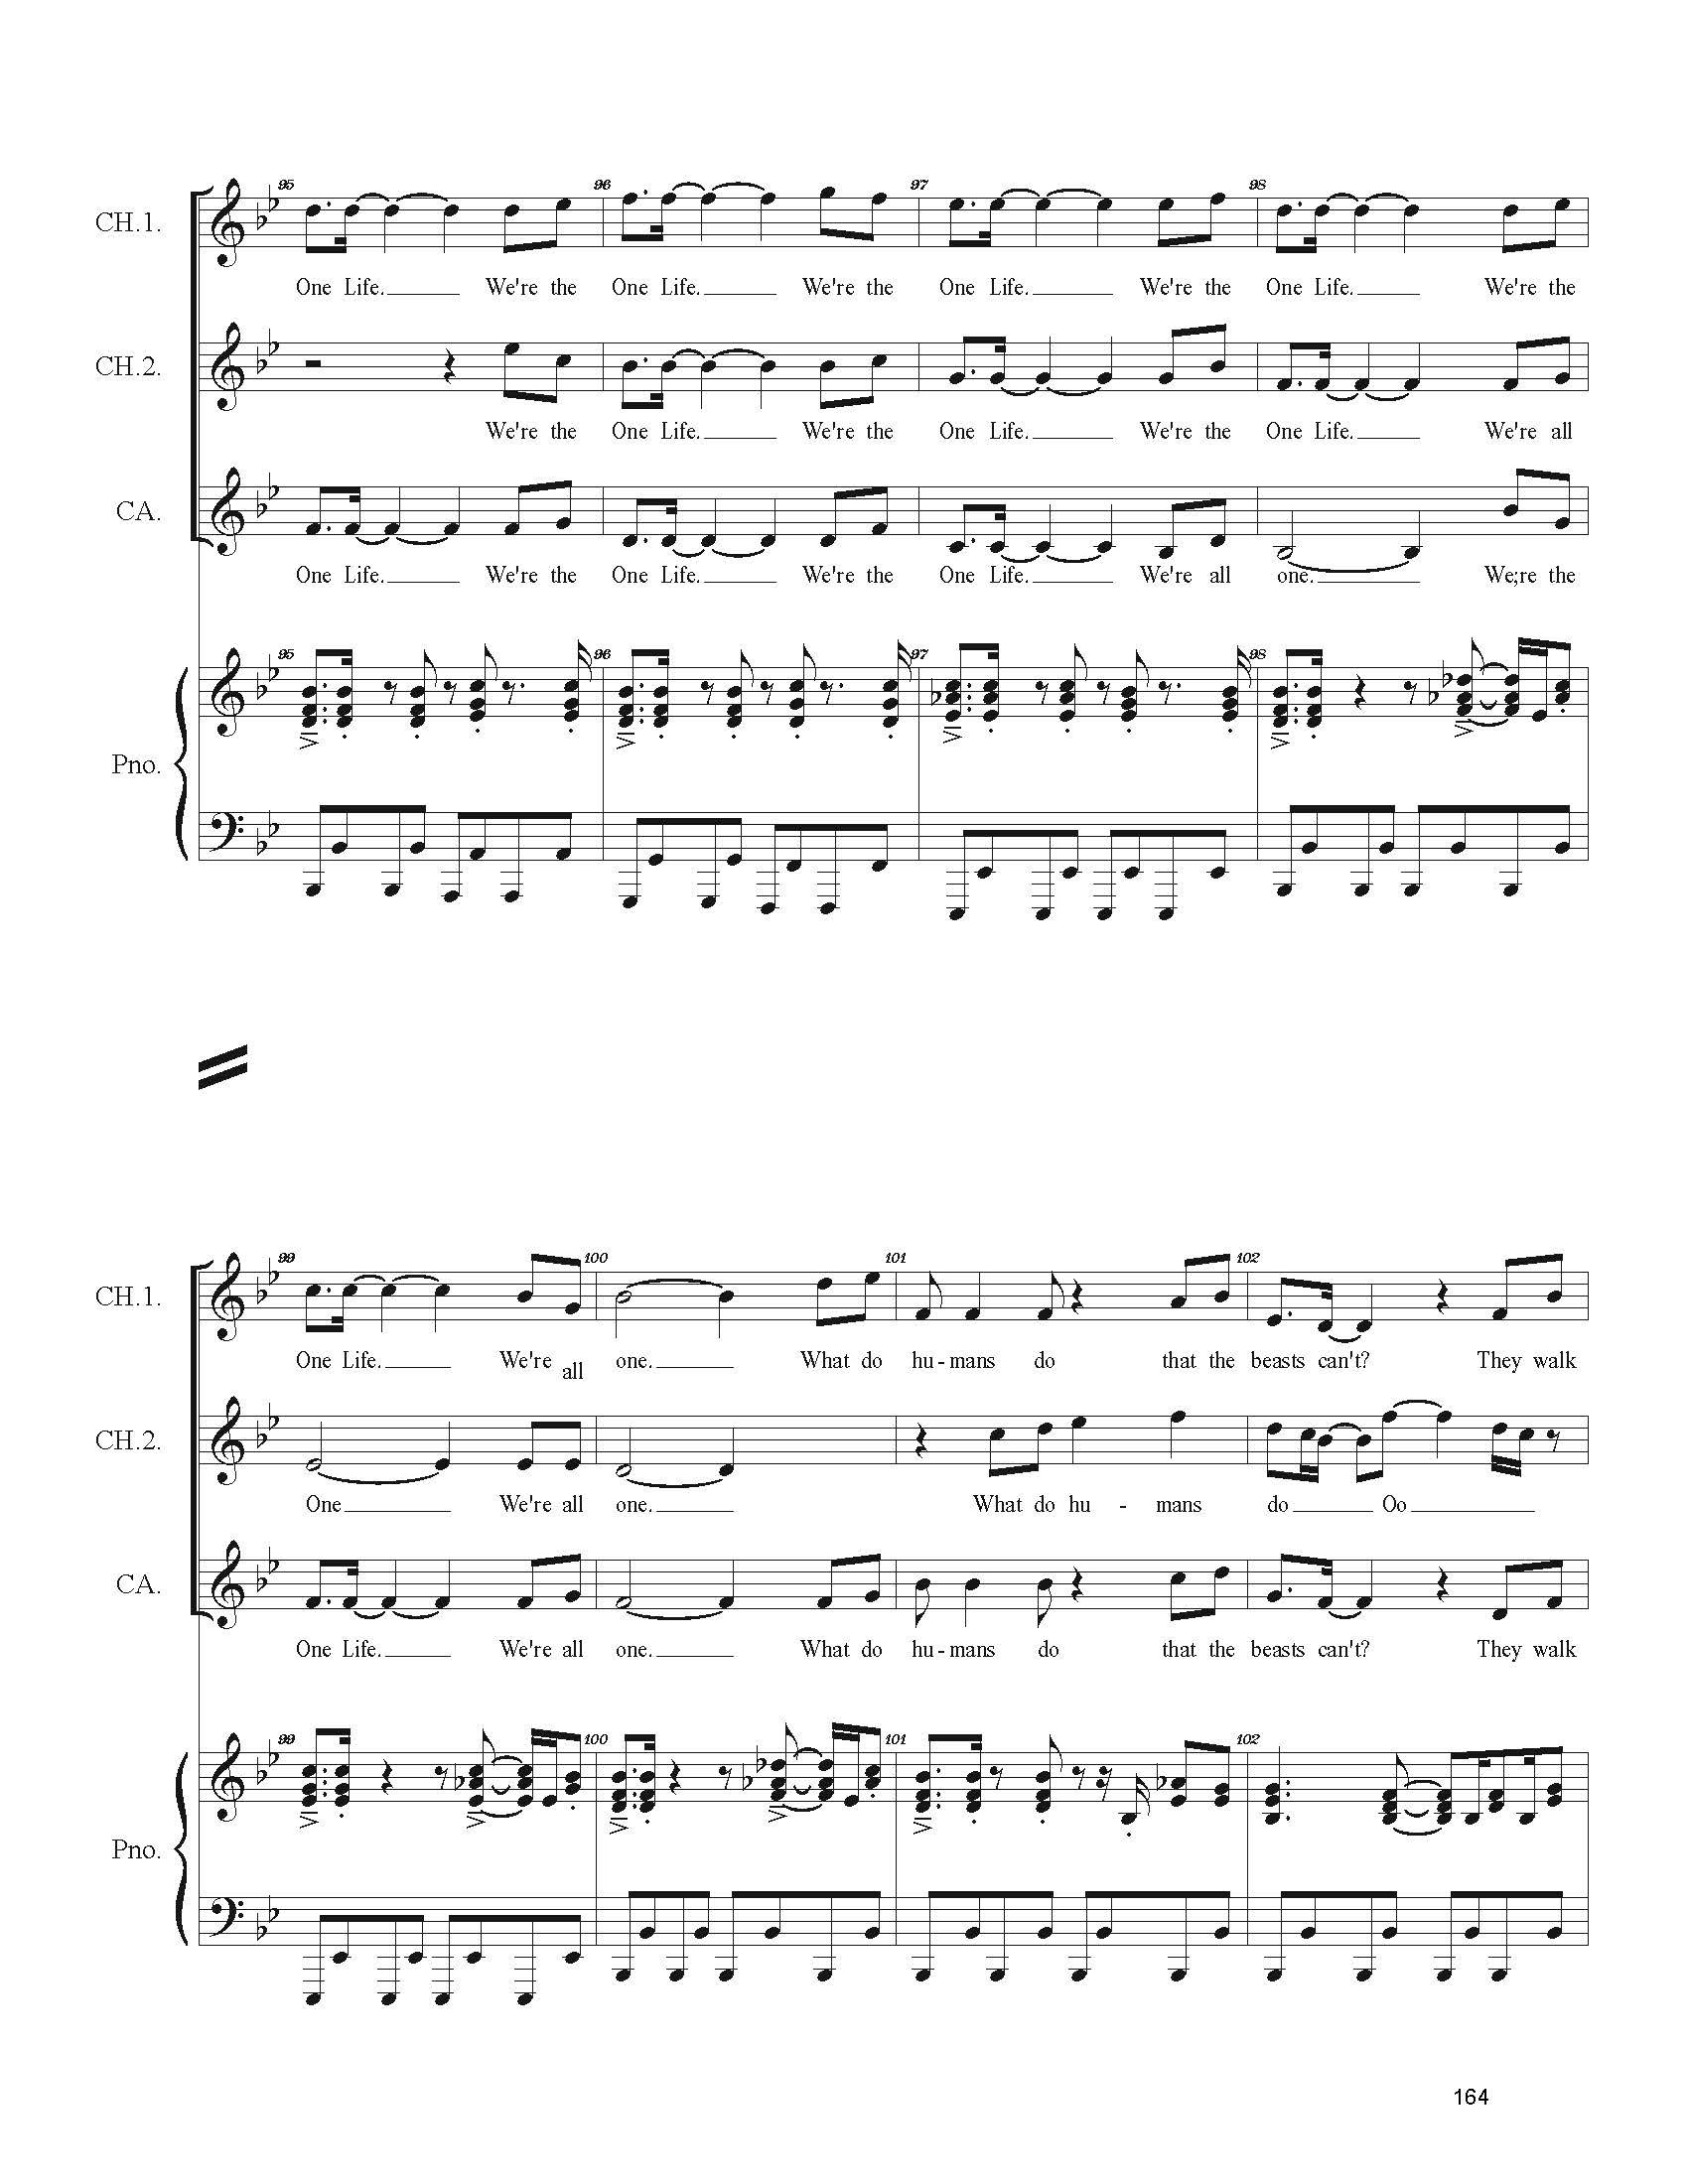 FULL PIANO VOCAL SCORE DRAFT 1 - Score_Page_164.jpg